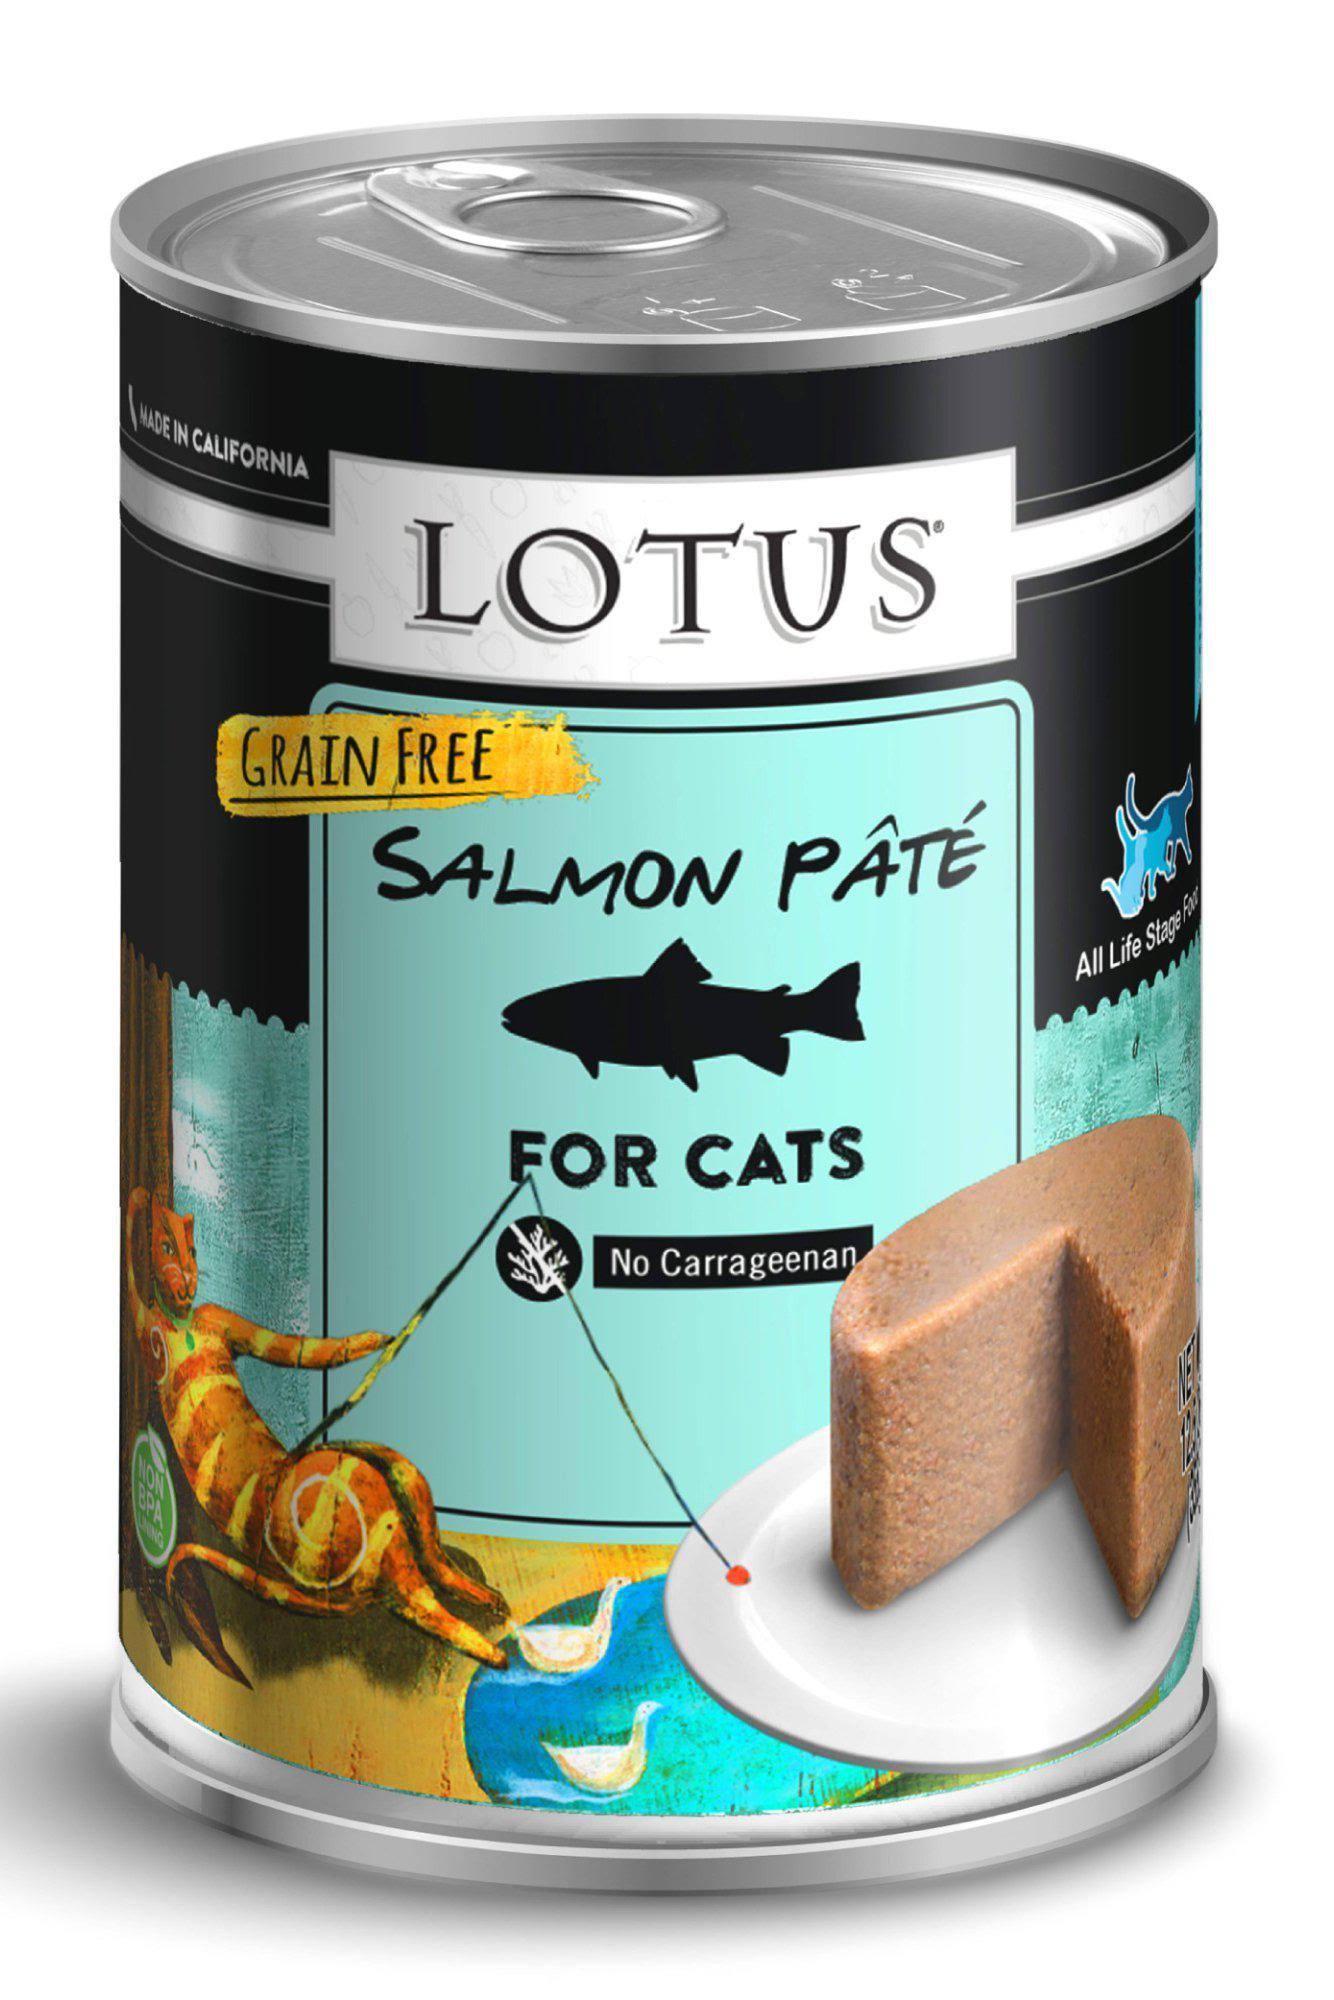 Lotus Grain Free Salmon & Vegetable Pate Canned Cat Food 2.75oz